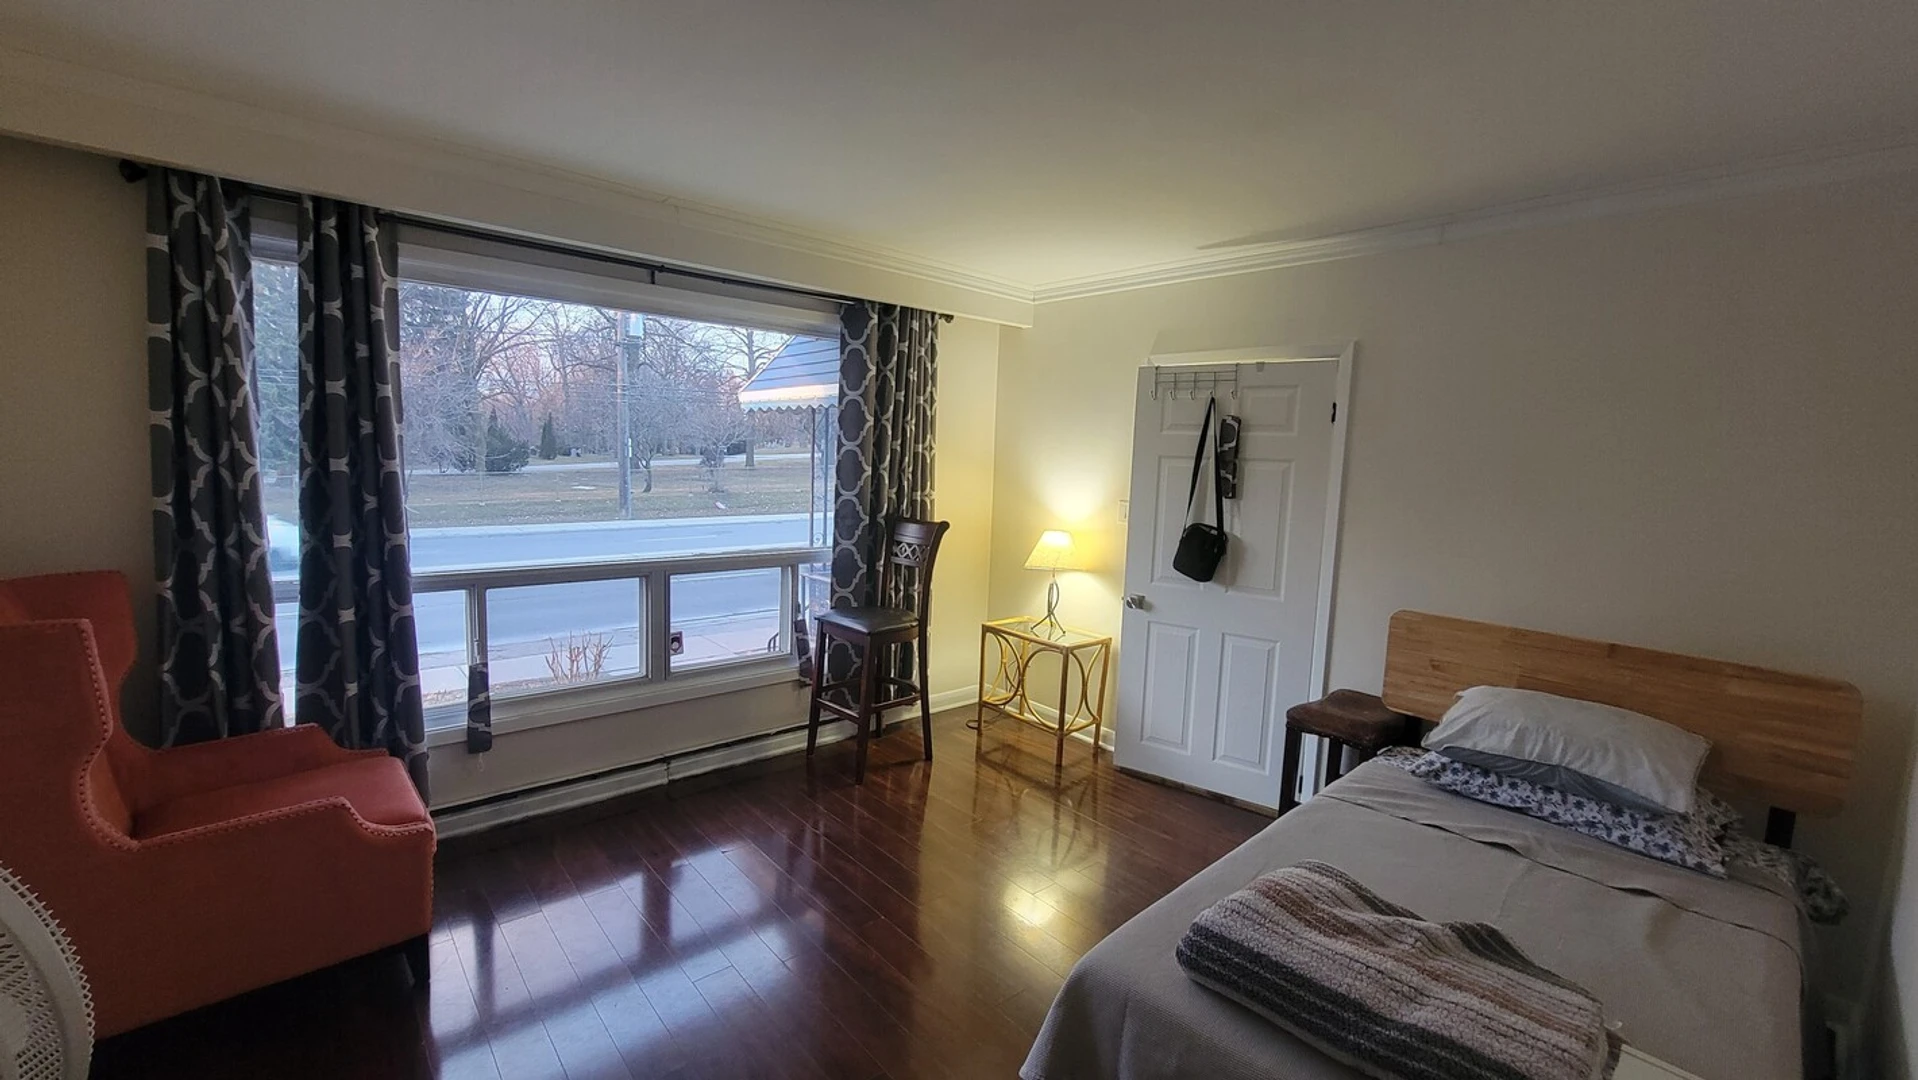 Shared room in 3-bedroom flat Toronto